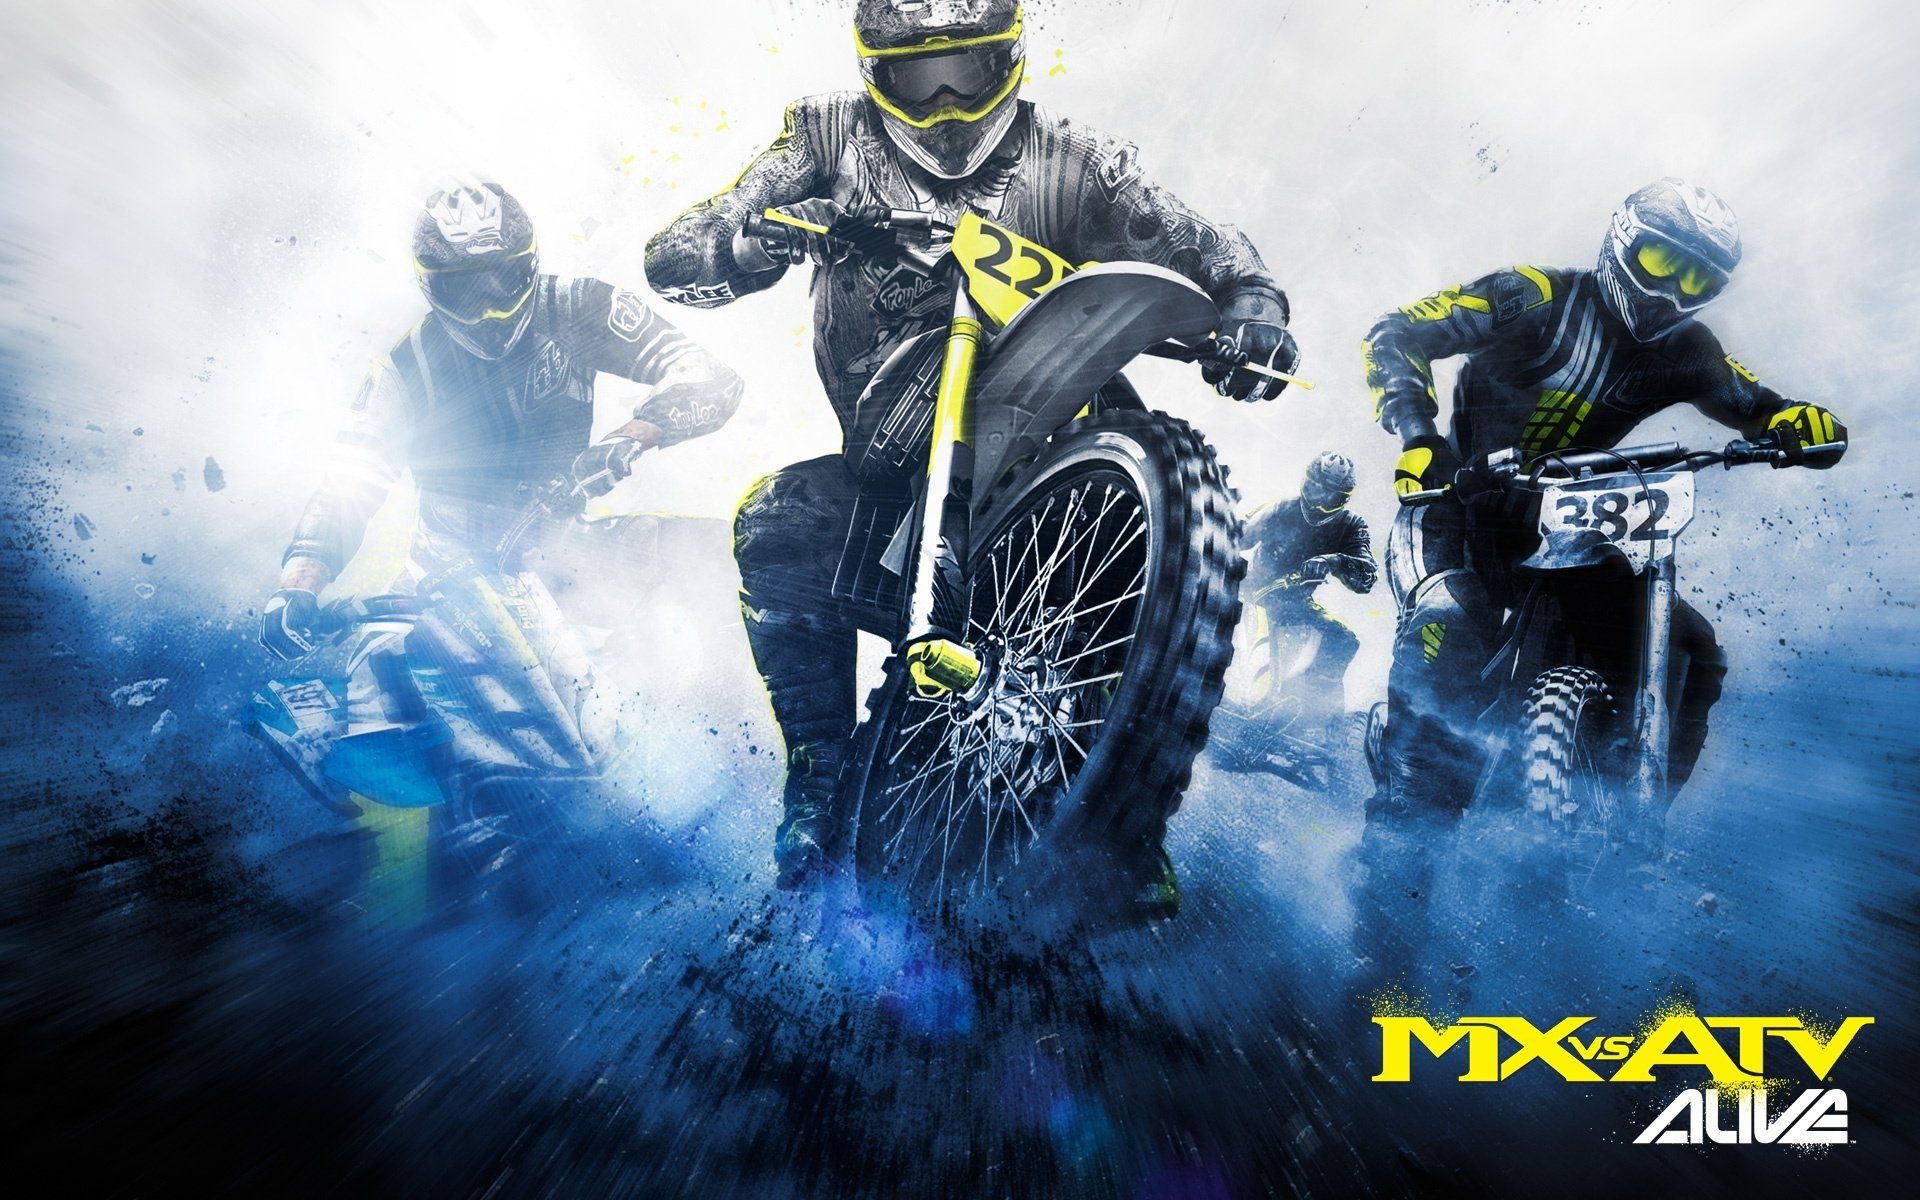 MX vs ATV Alive HD Wallpaper and Background Image